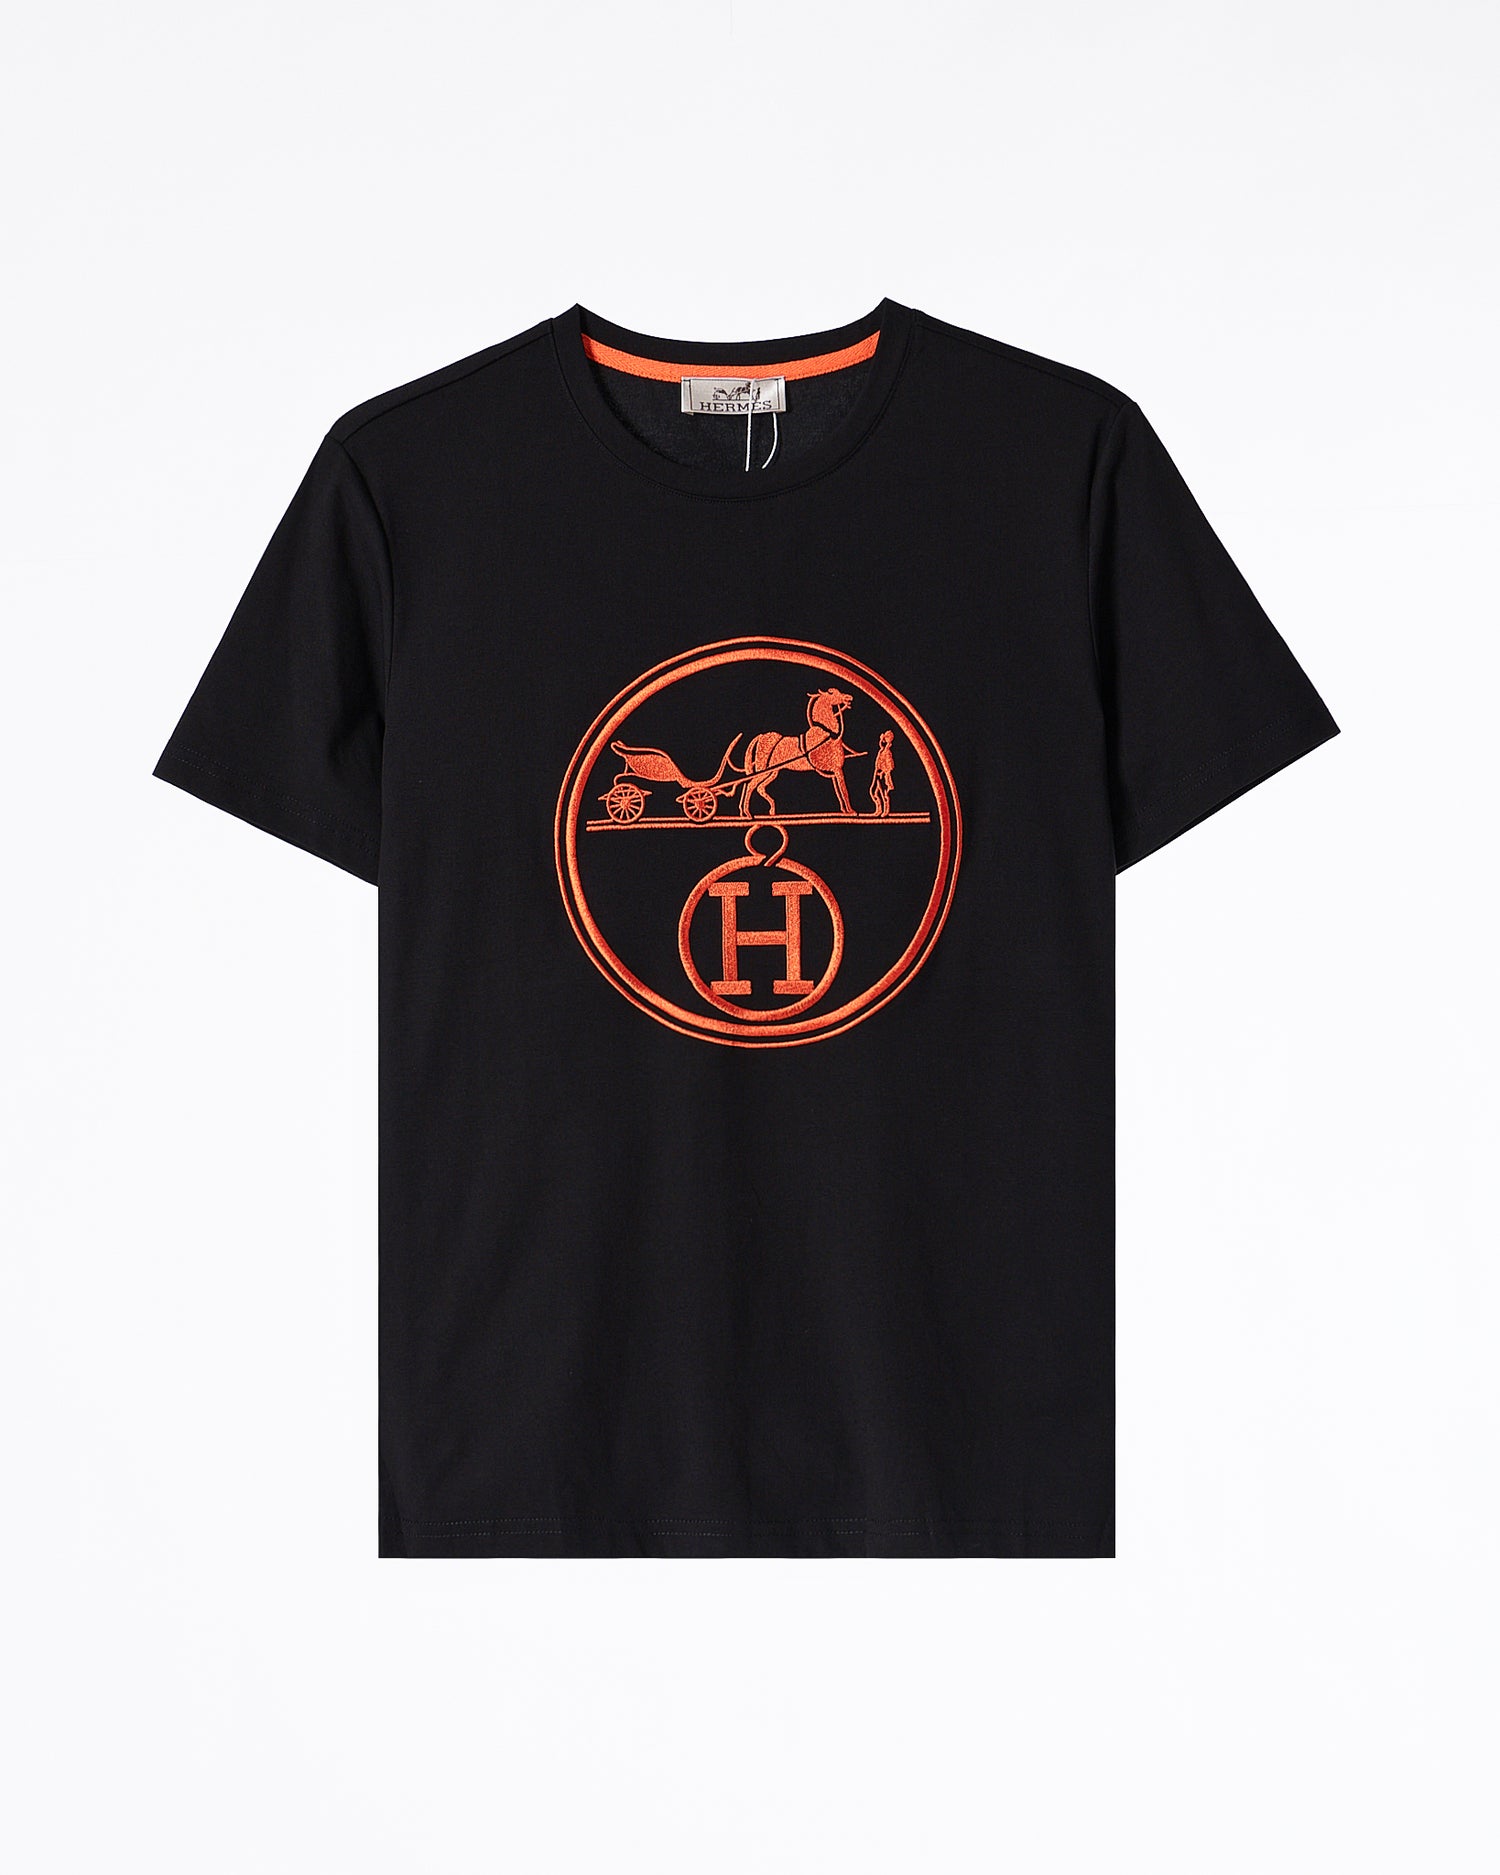 H Logo Embroidered Men T-Shirt 55.90